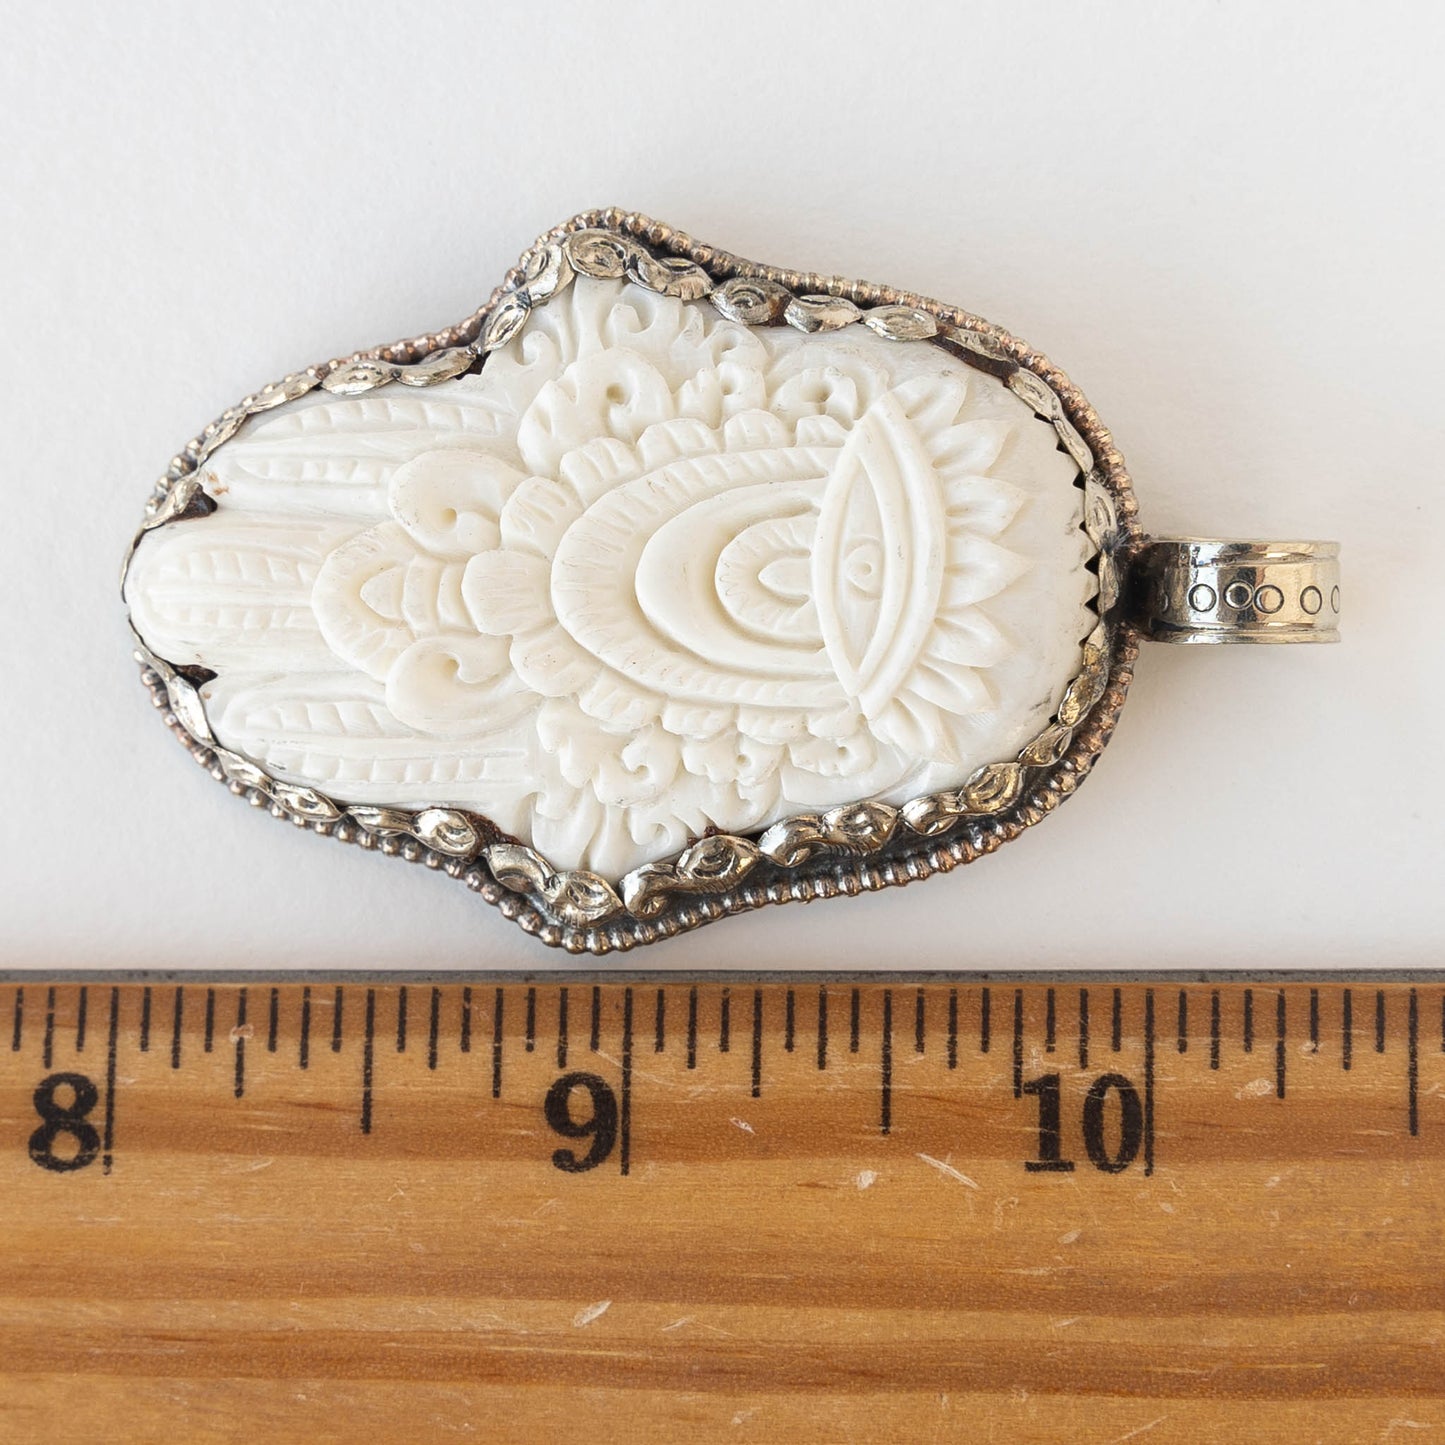 49mm Hamsa Hand Pendant set in Tibetan Silver - 1 piece